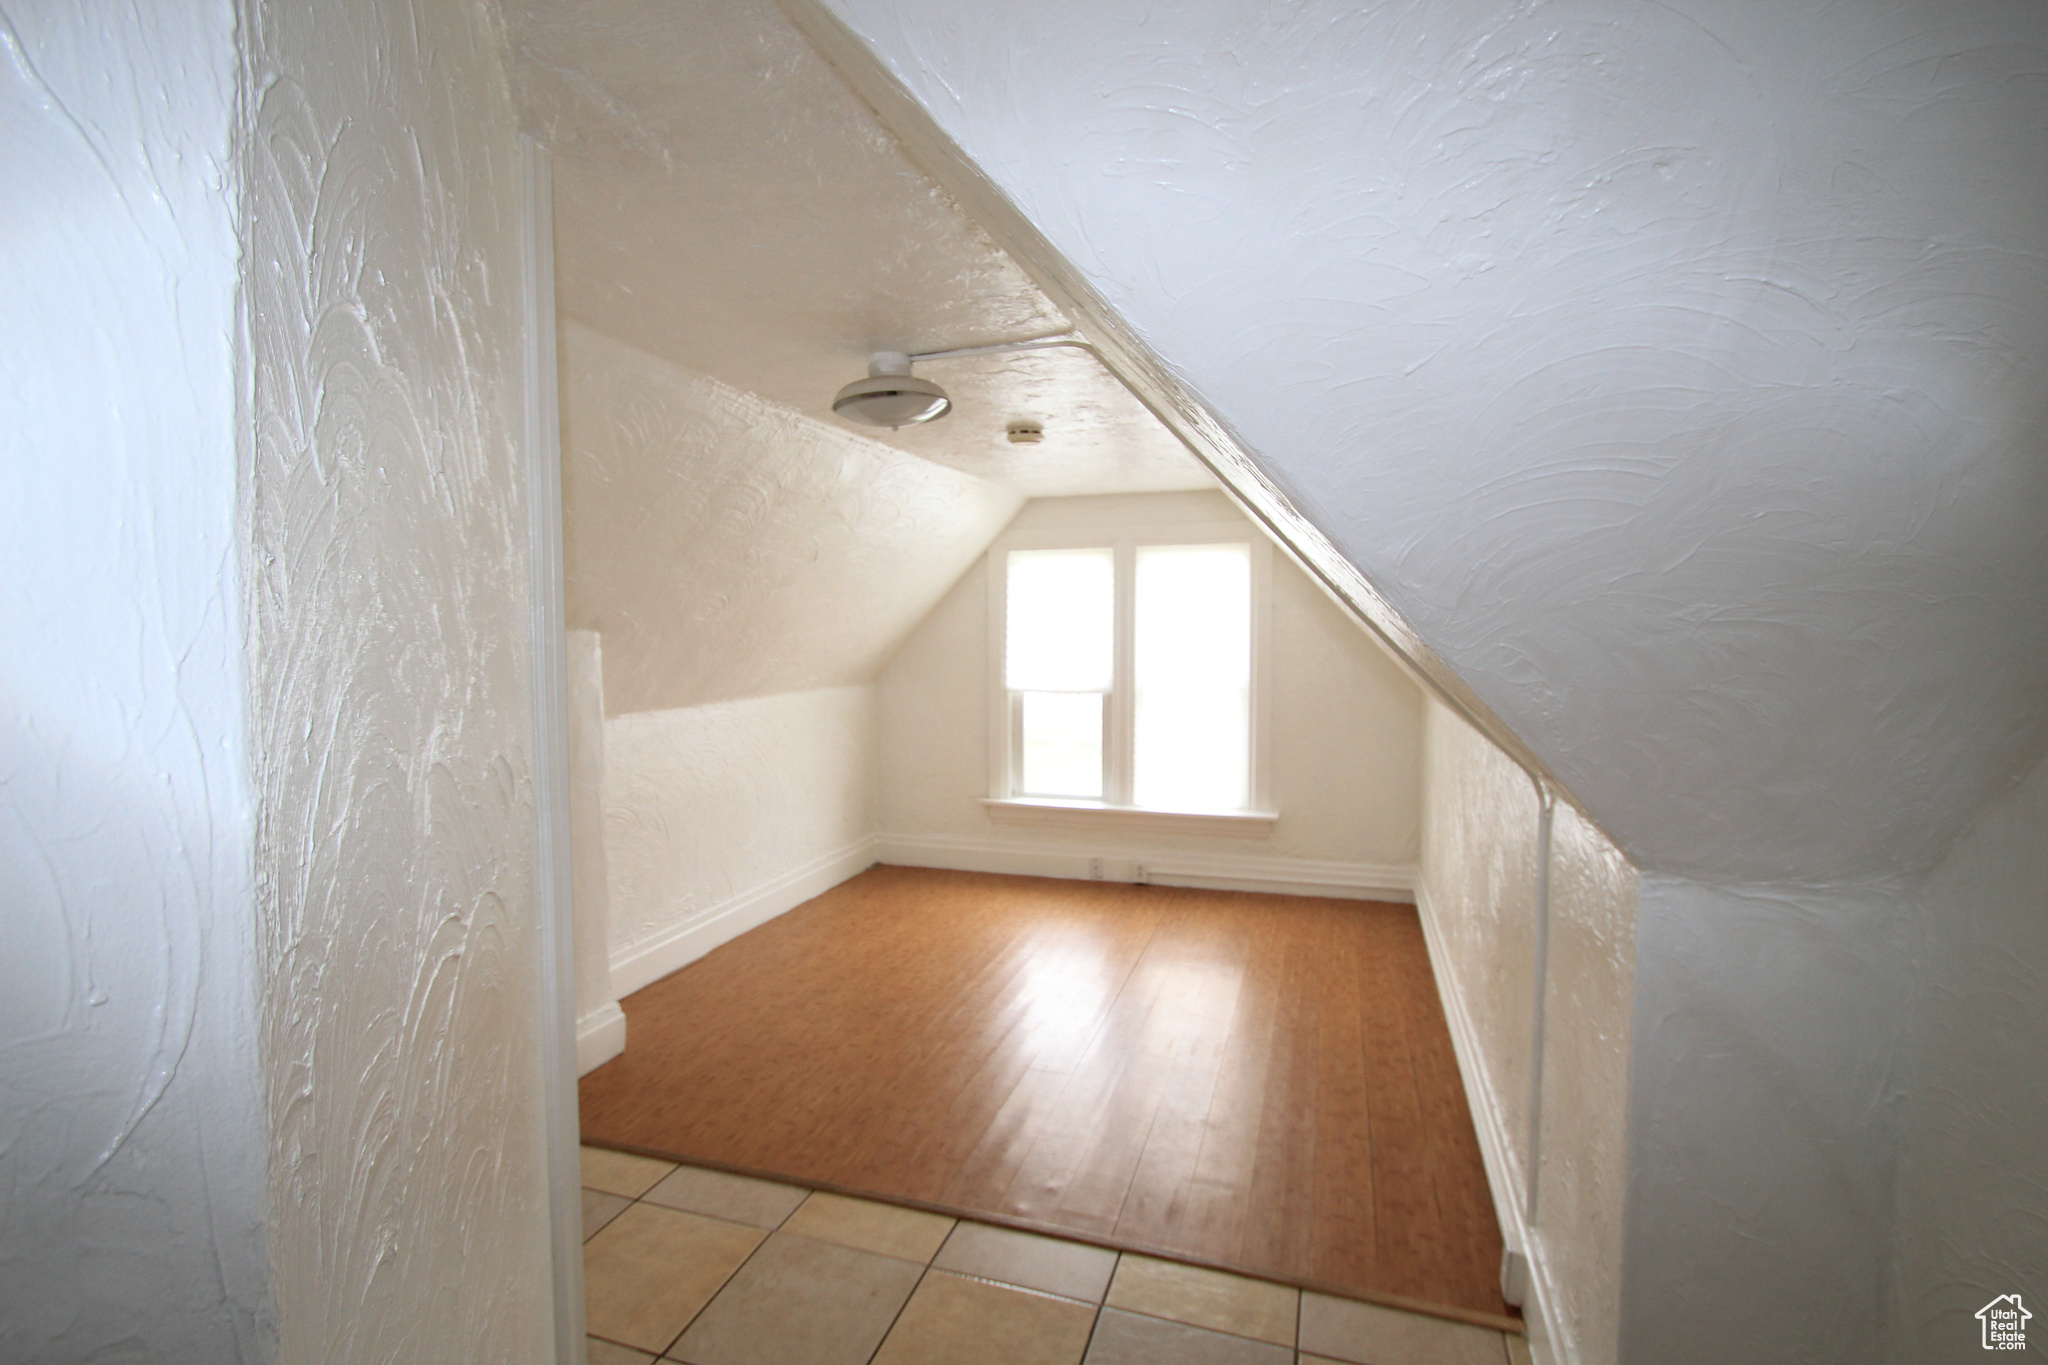 Bonus room with vaulted ceiling and light tile flooring